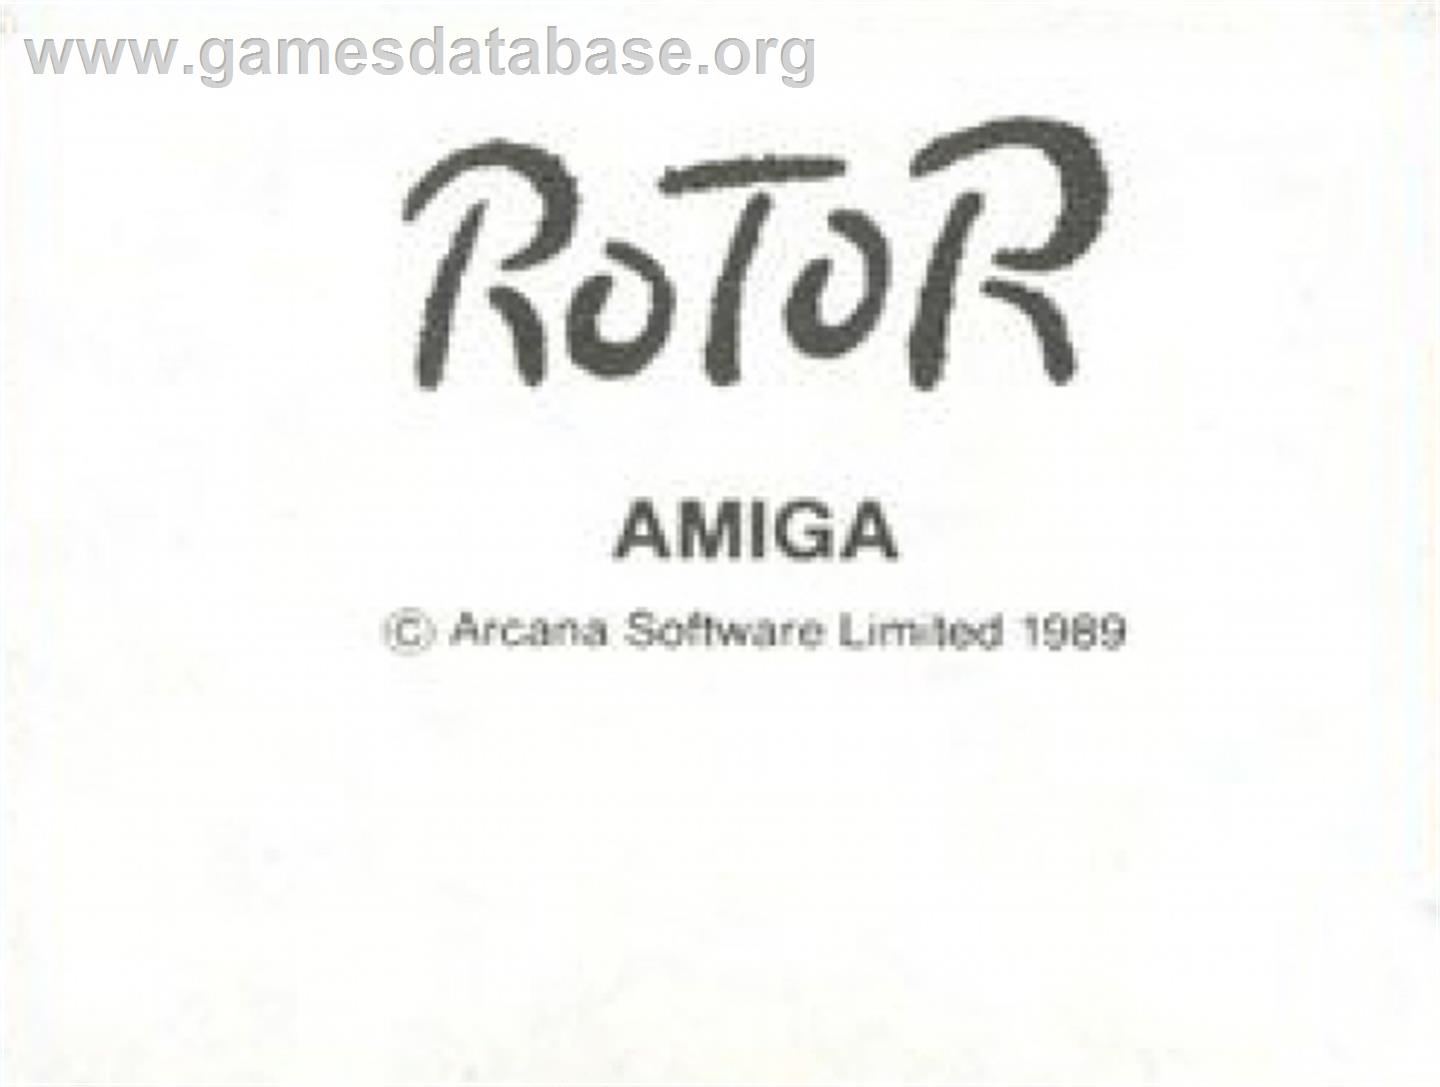 Rotor - Commodore Amiga - Artwork - Cartridge Top